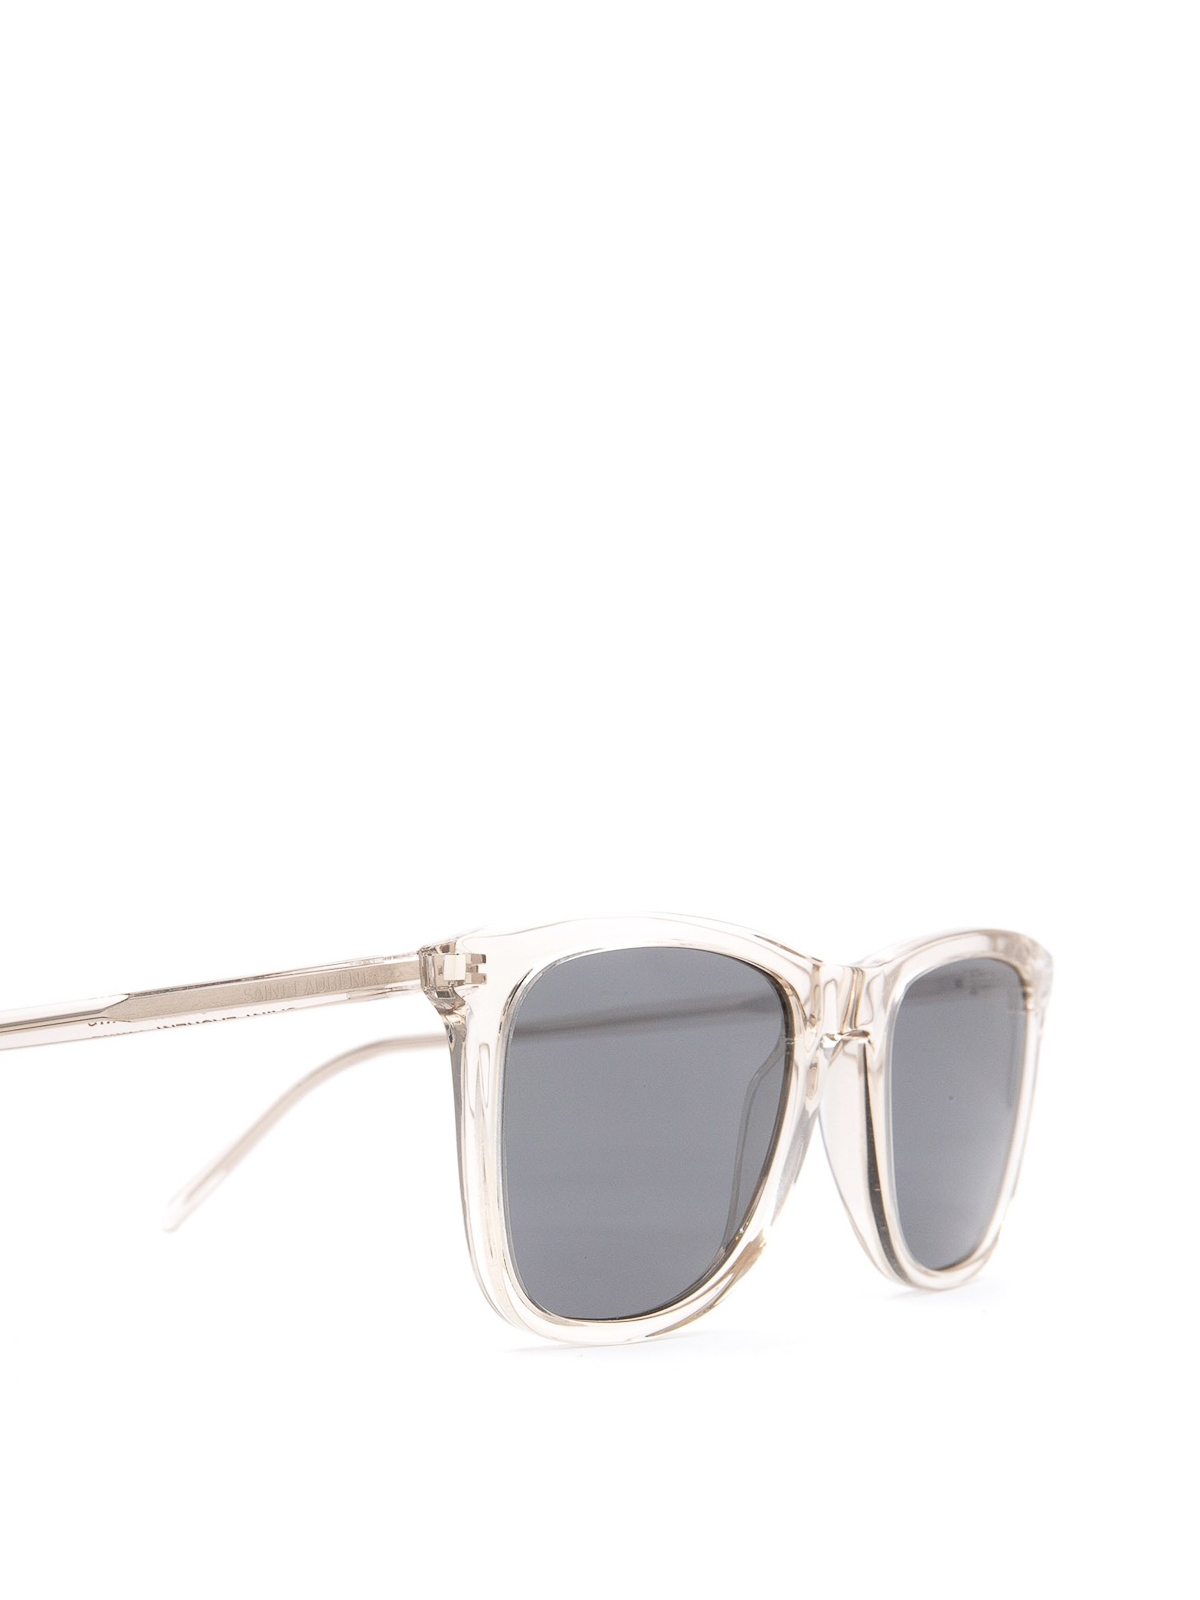 Sunglasses Saint Laurent - SL 304 sunglasses - SL304005 | iKRIX.com